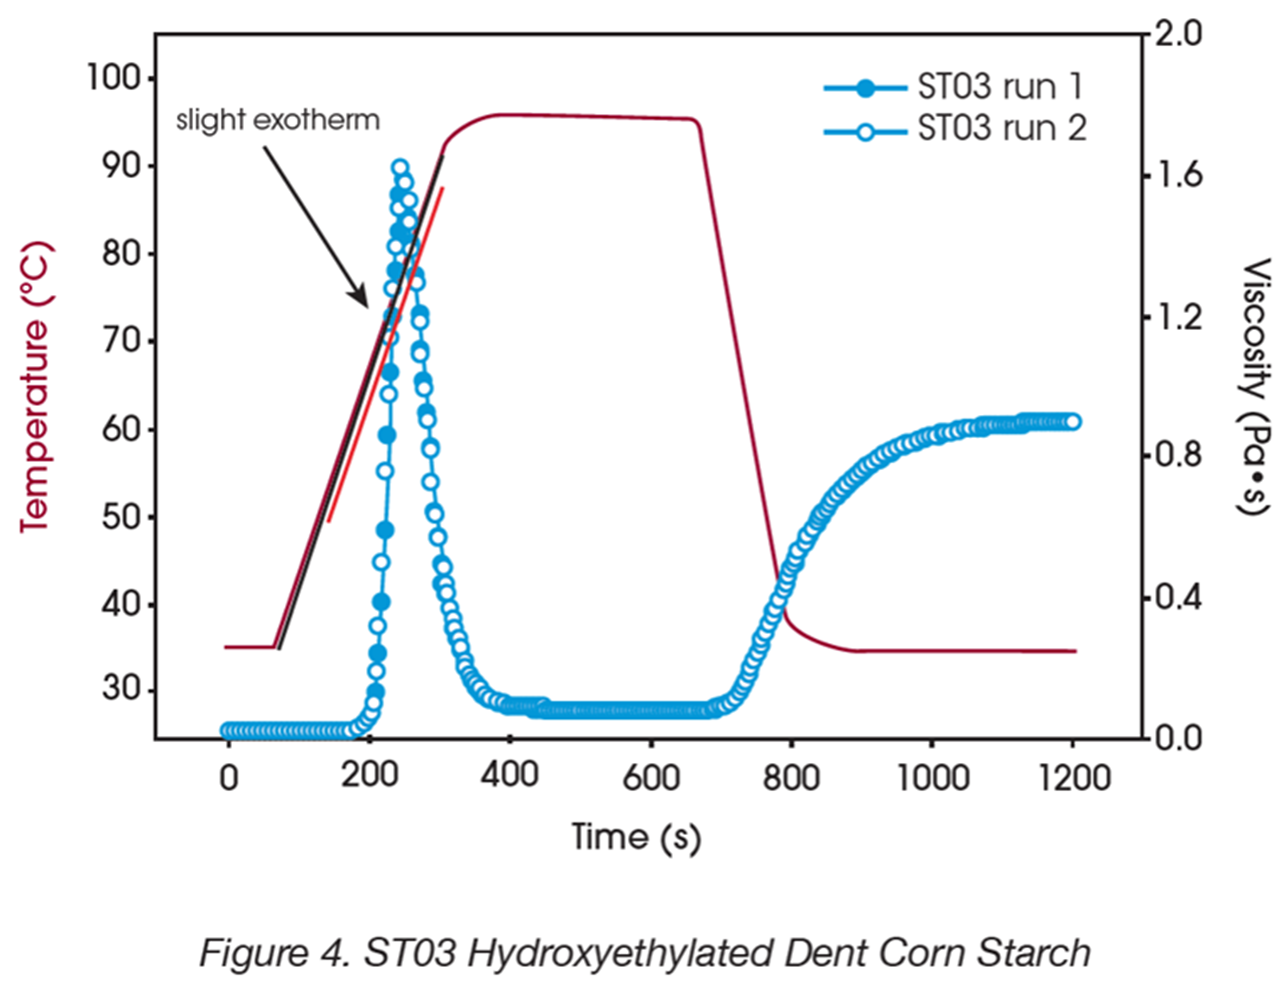 Figure 4. ST03 Hydroxyethylated Dent Corn Starch